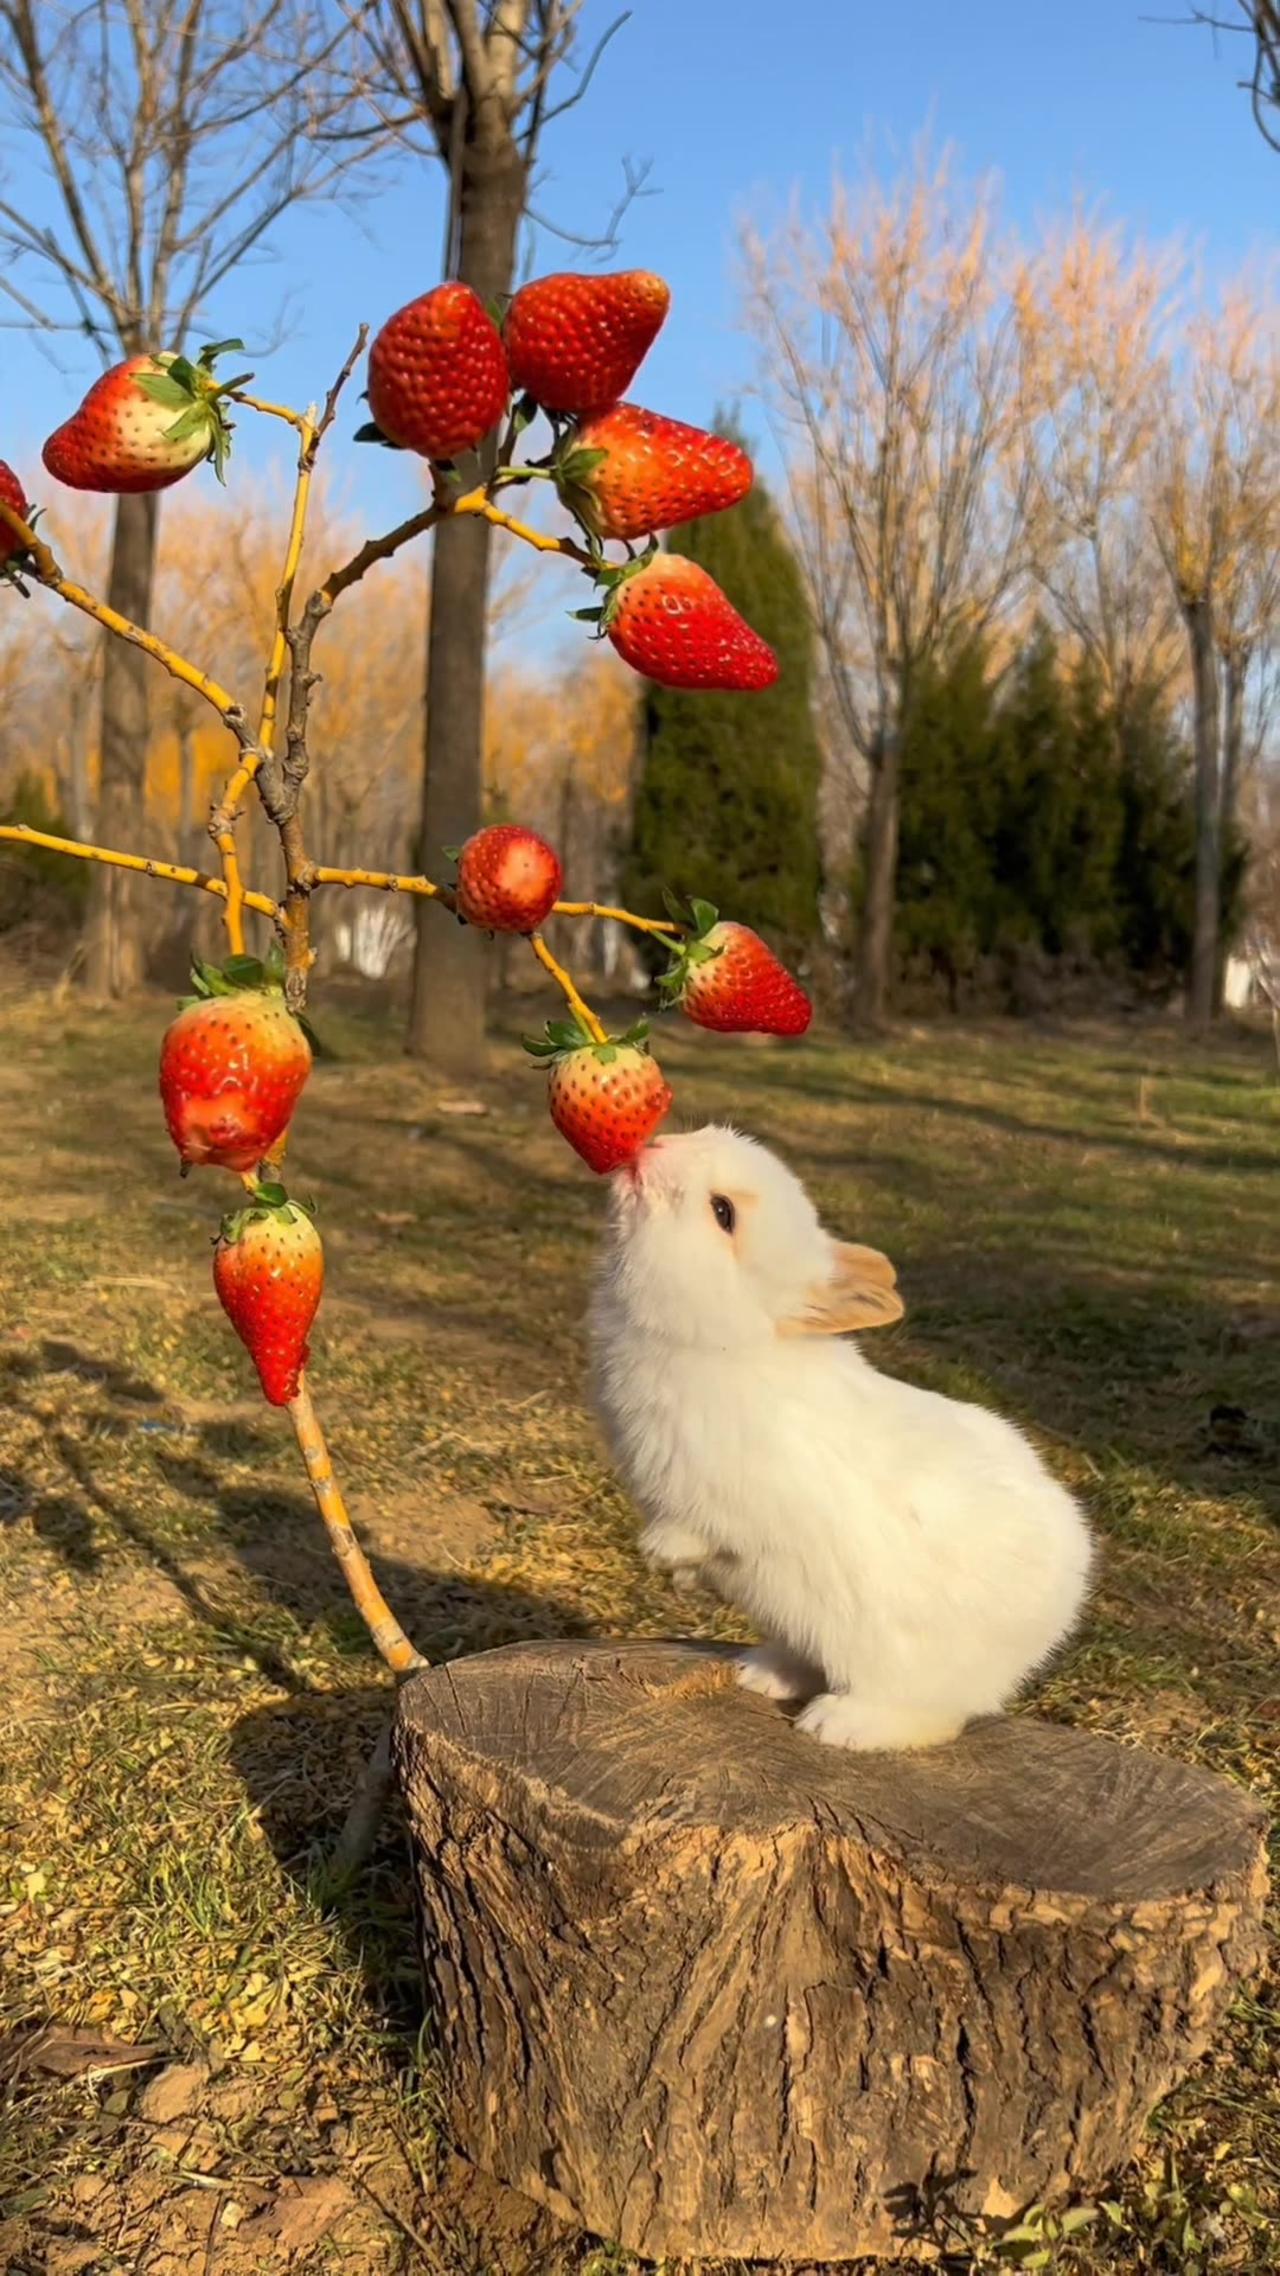 Cute baby rabbit 🐰🐰 😍😻